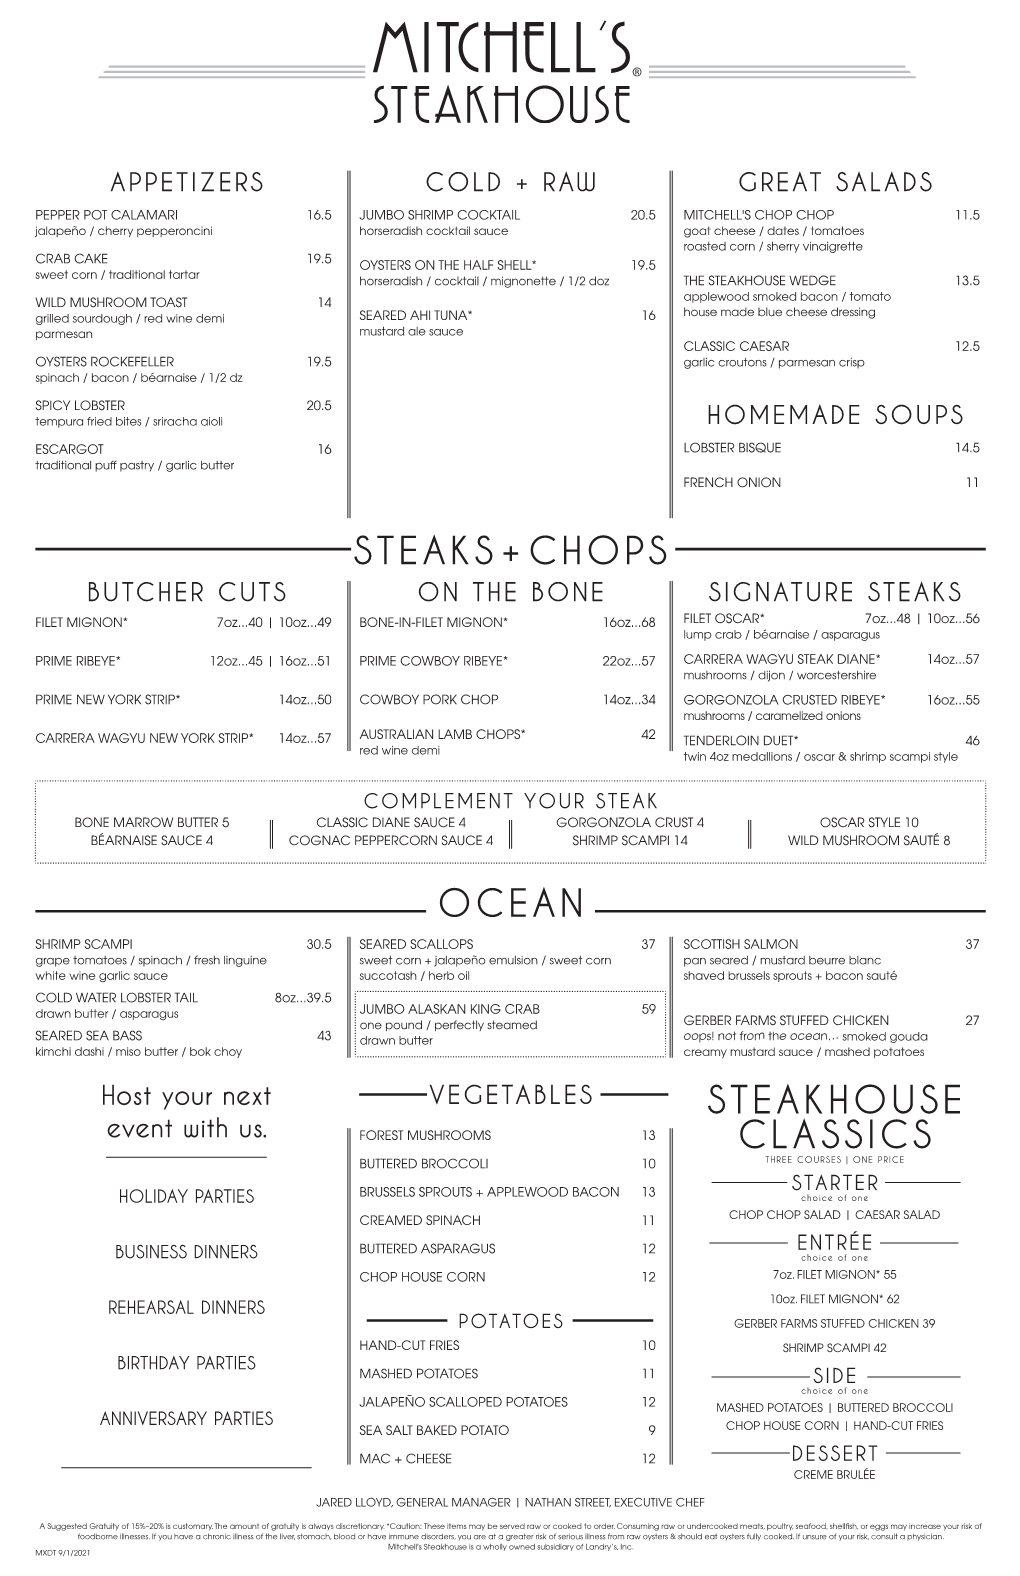 Steakhouse Classics Ocean Steaks+Chops